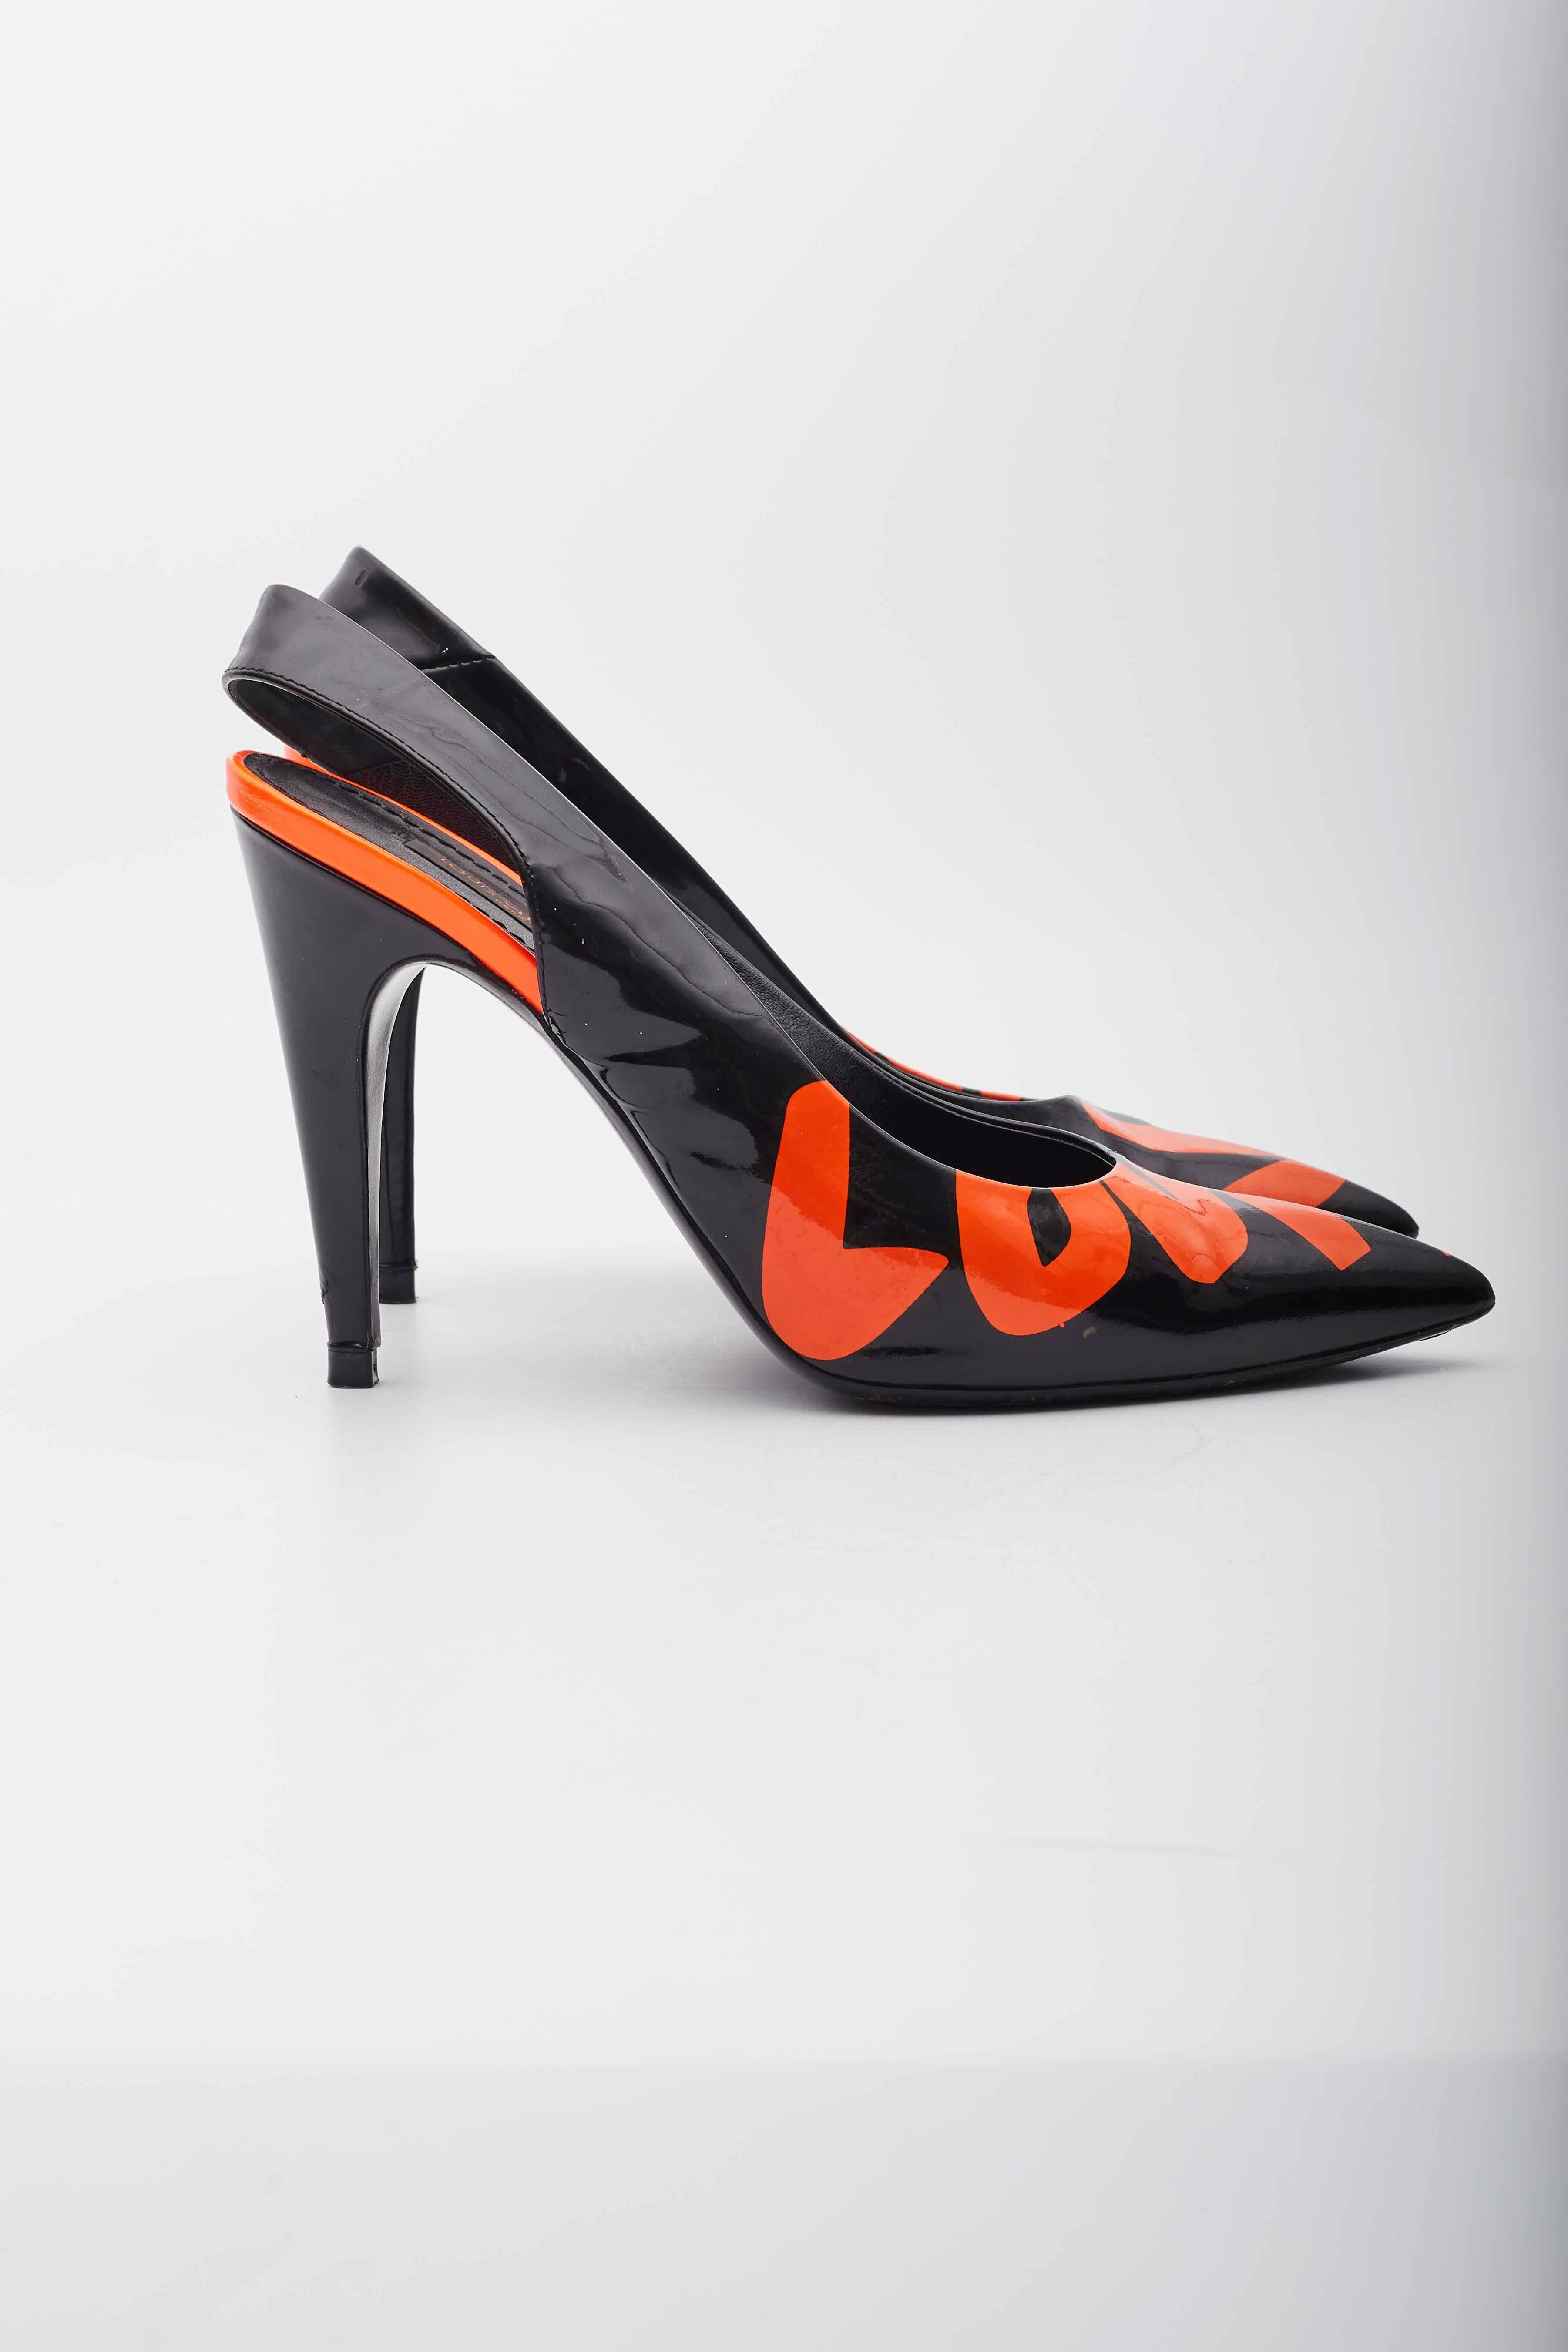 Louis Vuitton Patent Leather Orange Black Graffiti Slingback Heels For Sale 1